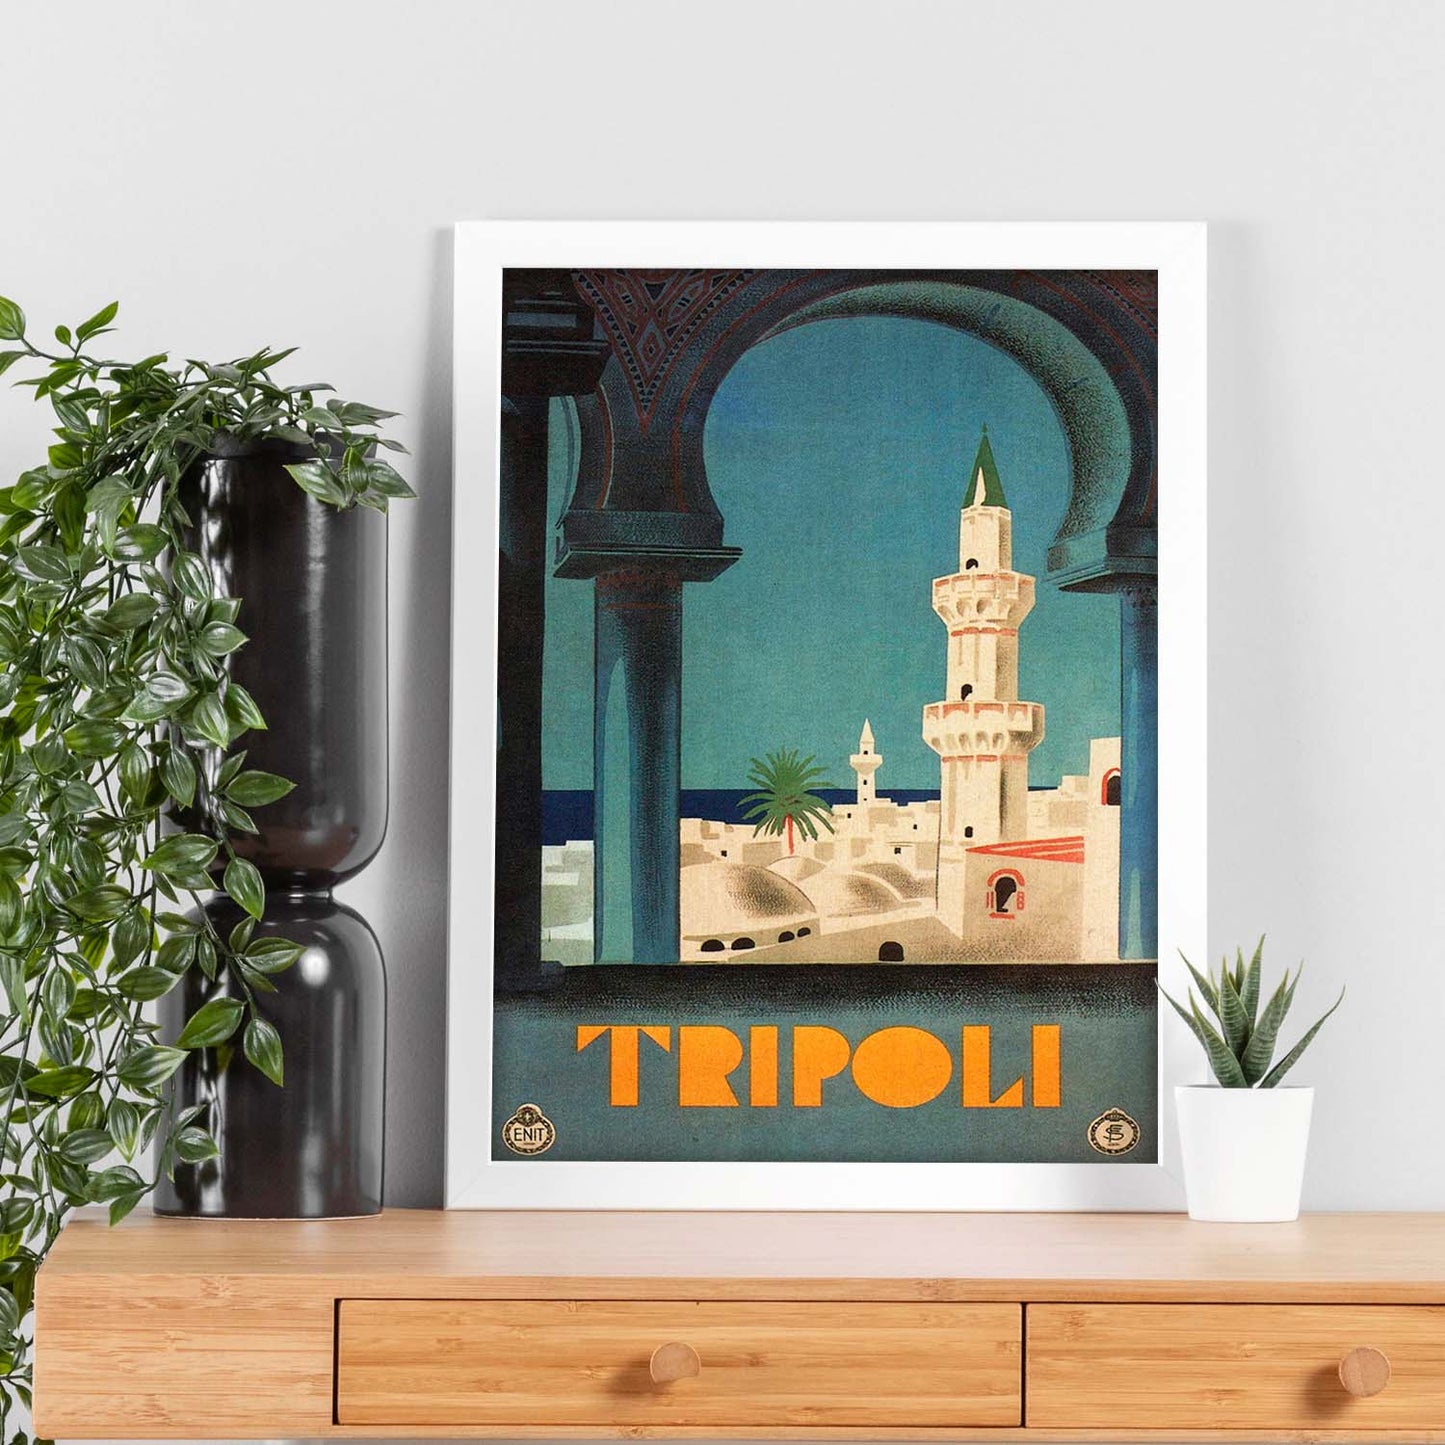 Poster vintage. Cartel vintage de Francia e Italia. Conoce Tripoli.-Artwork-Nacnic-Nacnic Estudio SL